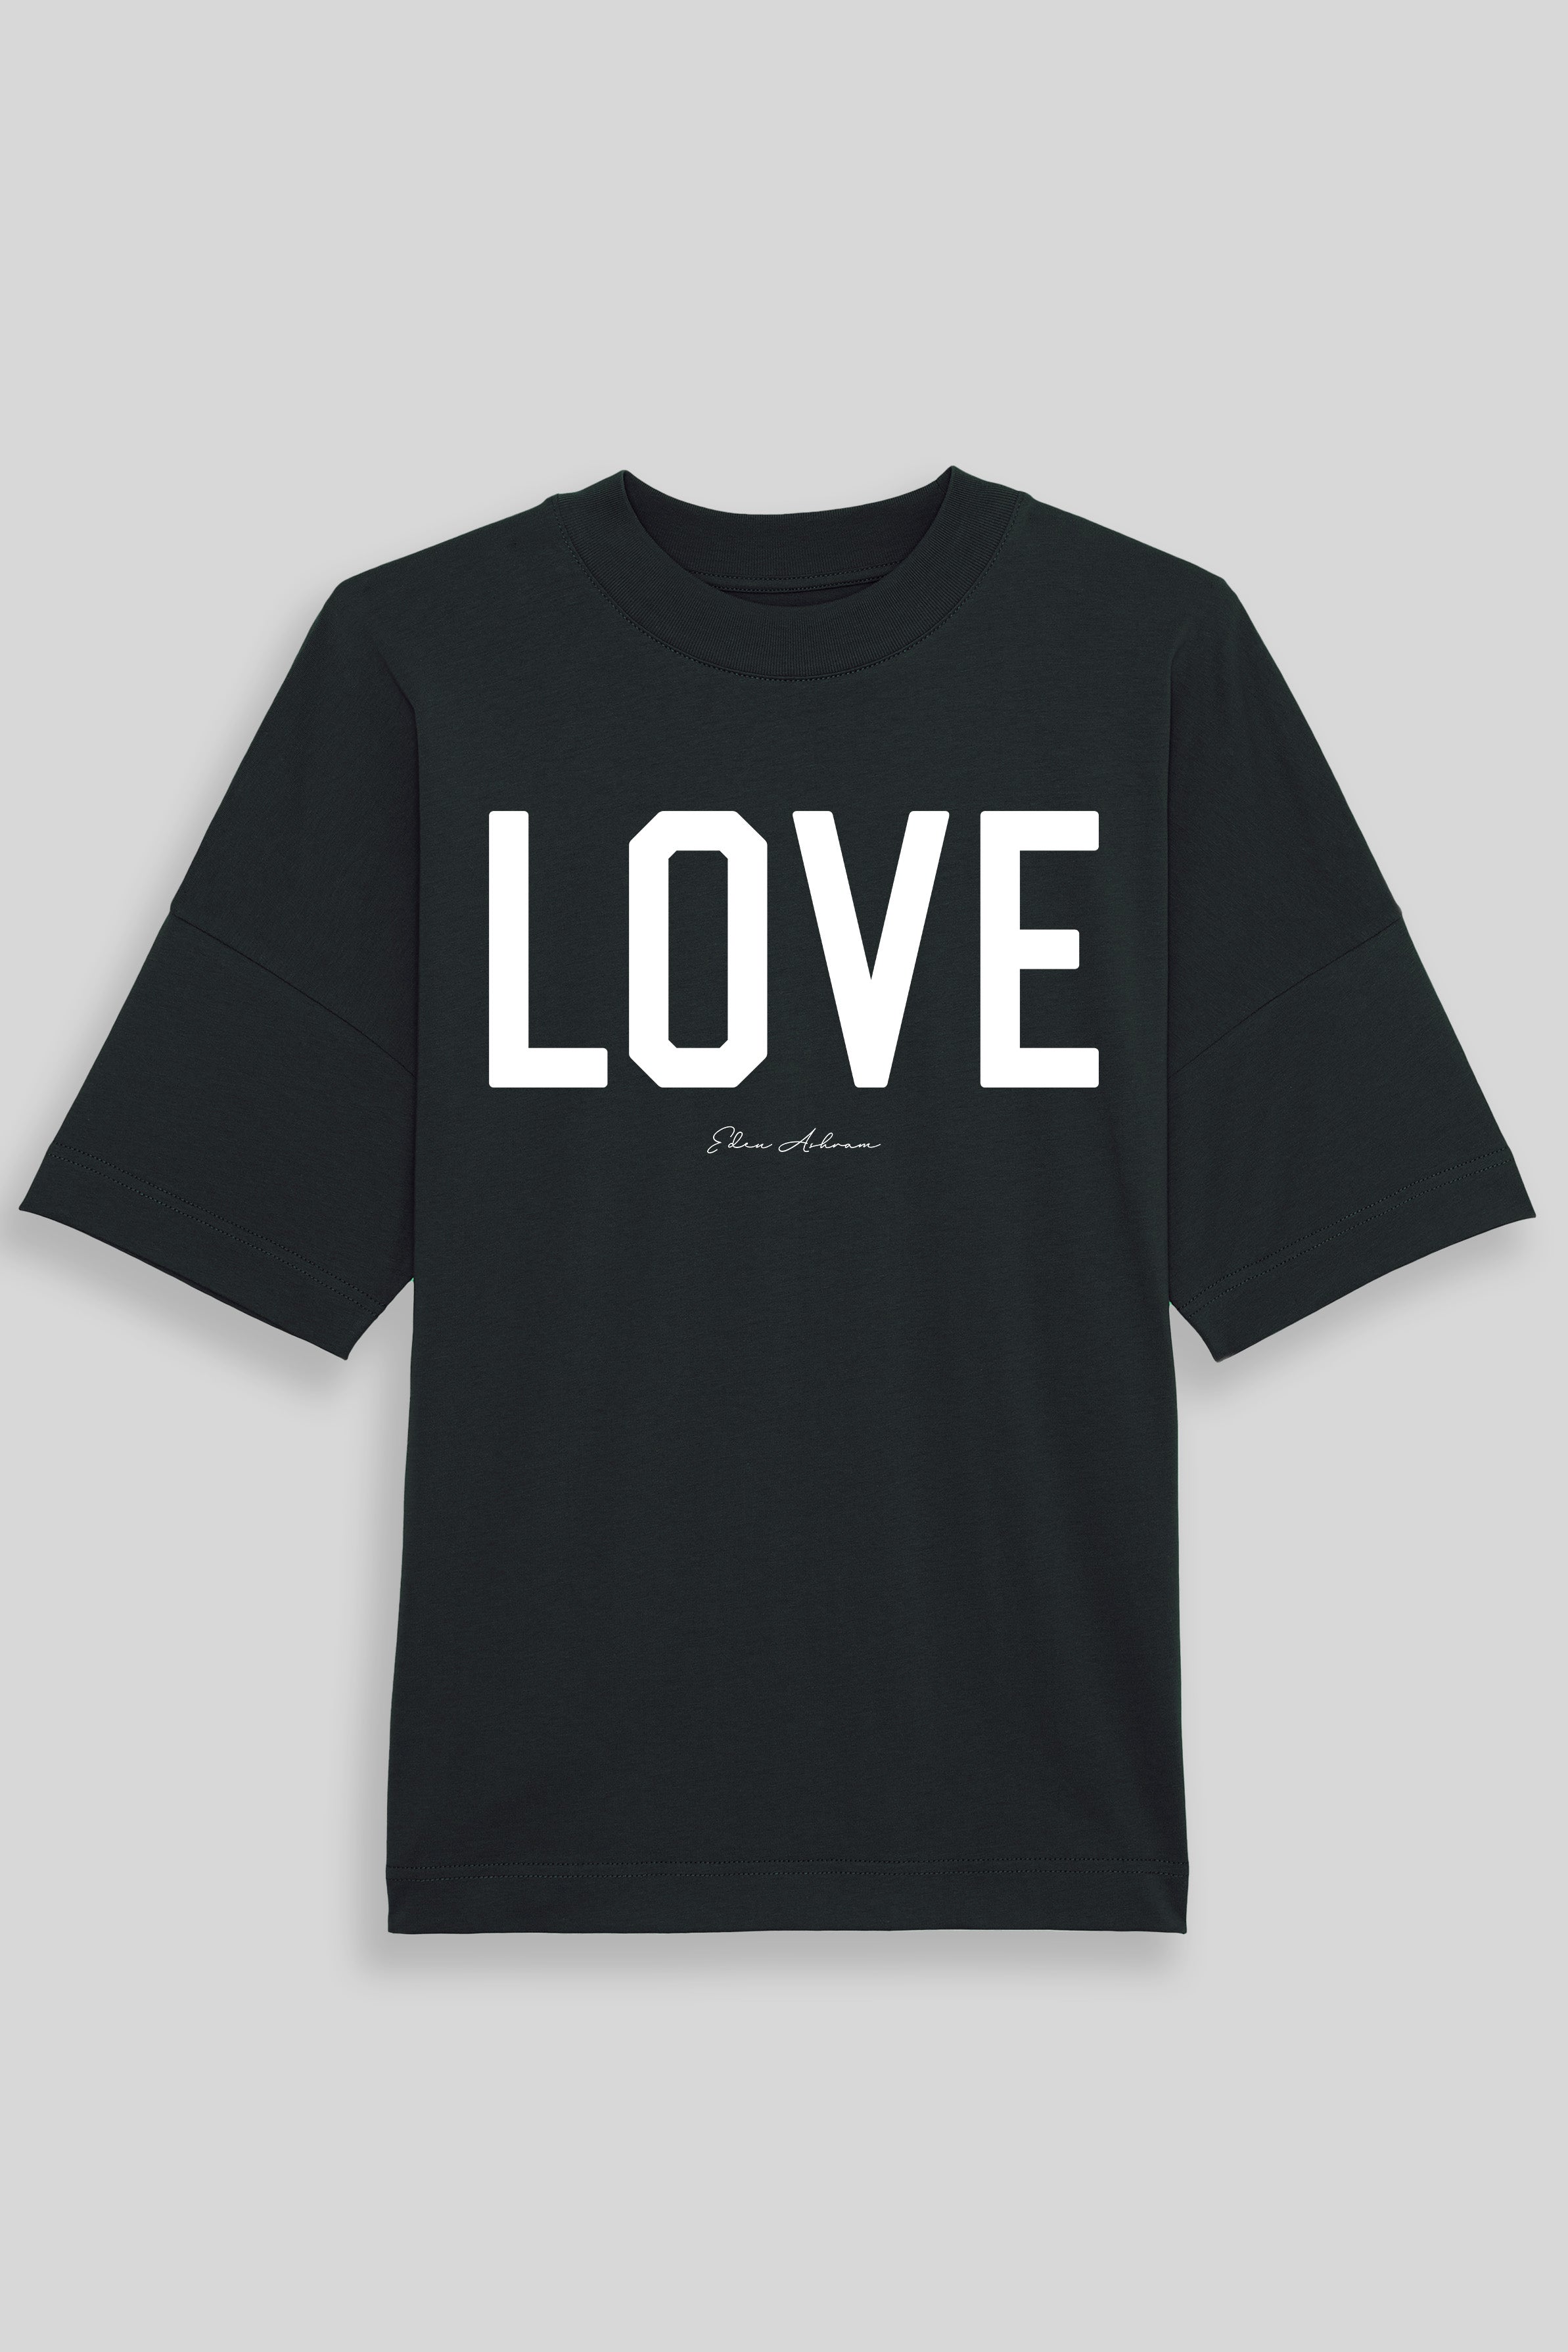 EDEN ASHRAM Love Premium Oversized Organic Dropped Shoulder T-Shirt Black